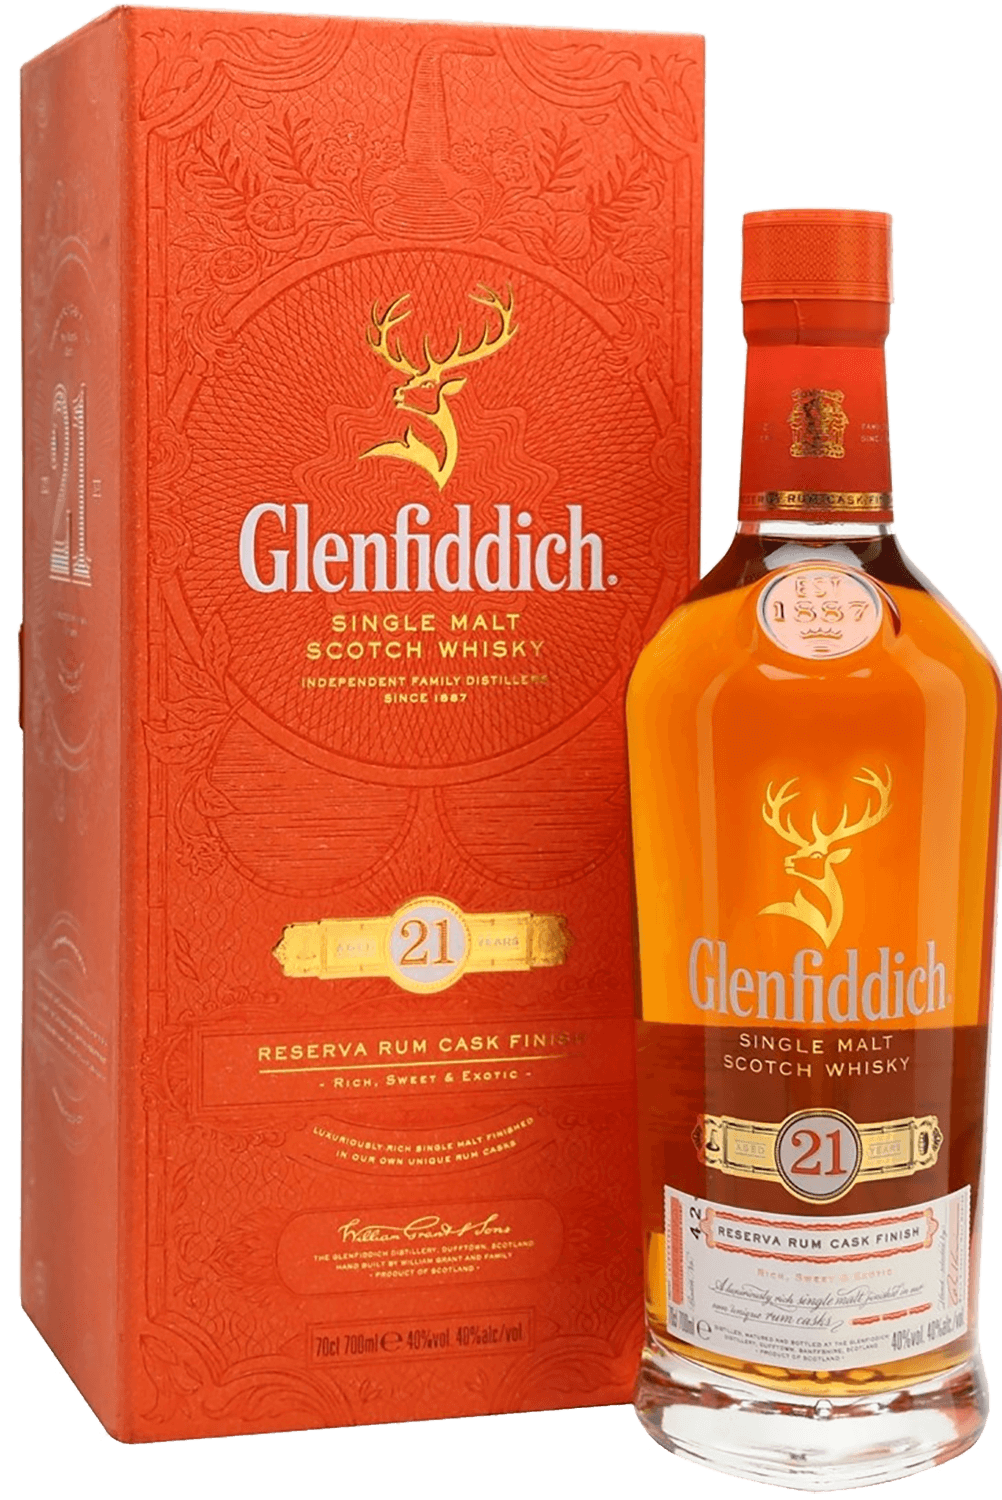 Glenfiddich Single Malt Scotch Whisky 21 yo (gift box) glenfiddich 15 y o single malt scotch whisky gift box with 2 glasses